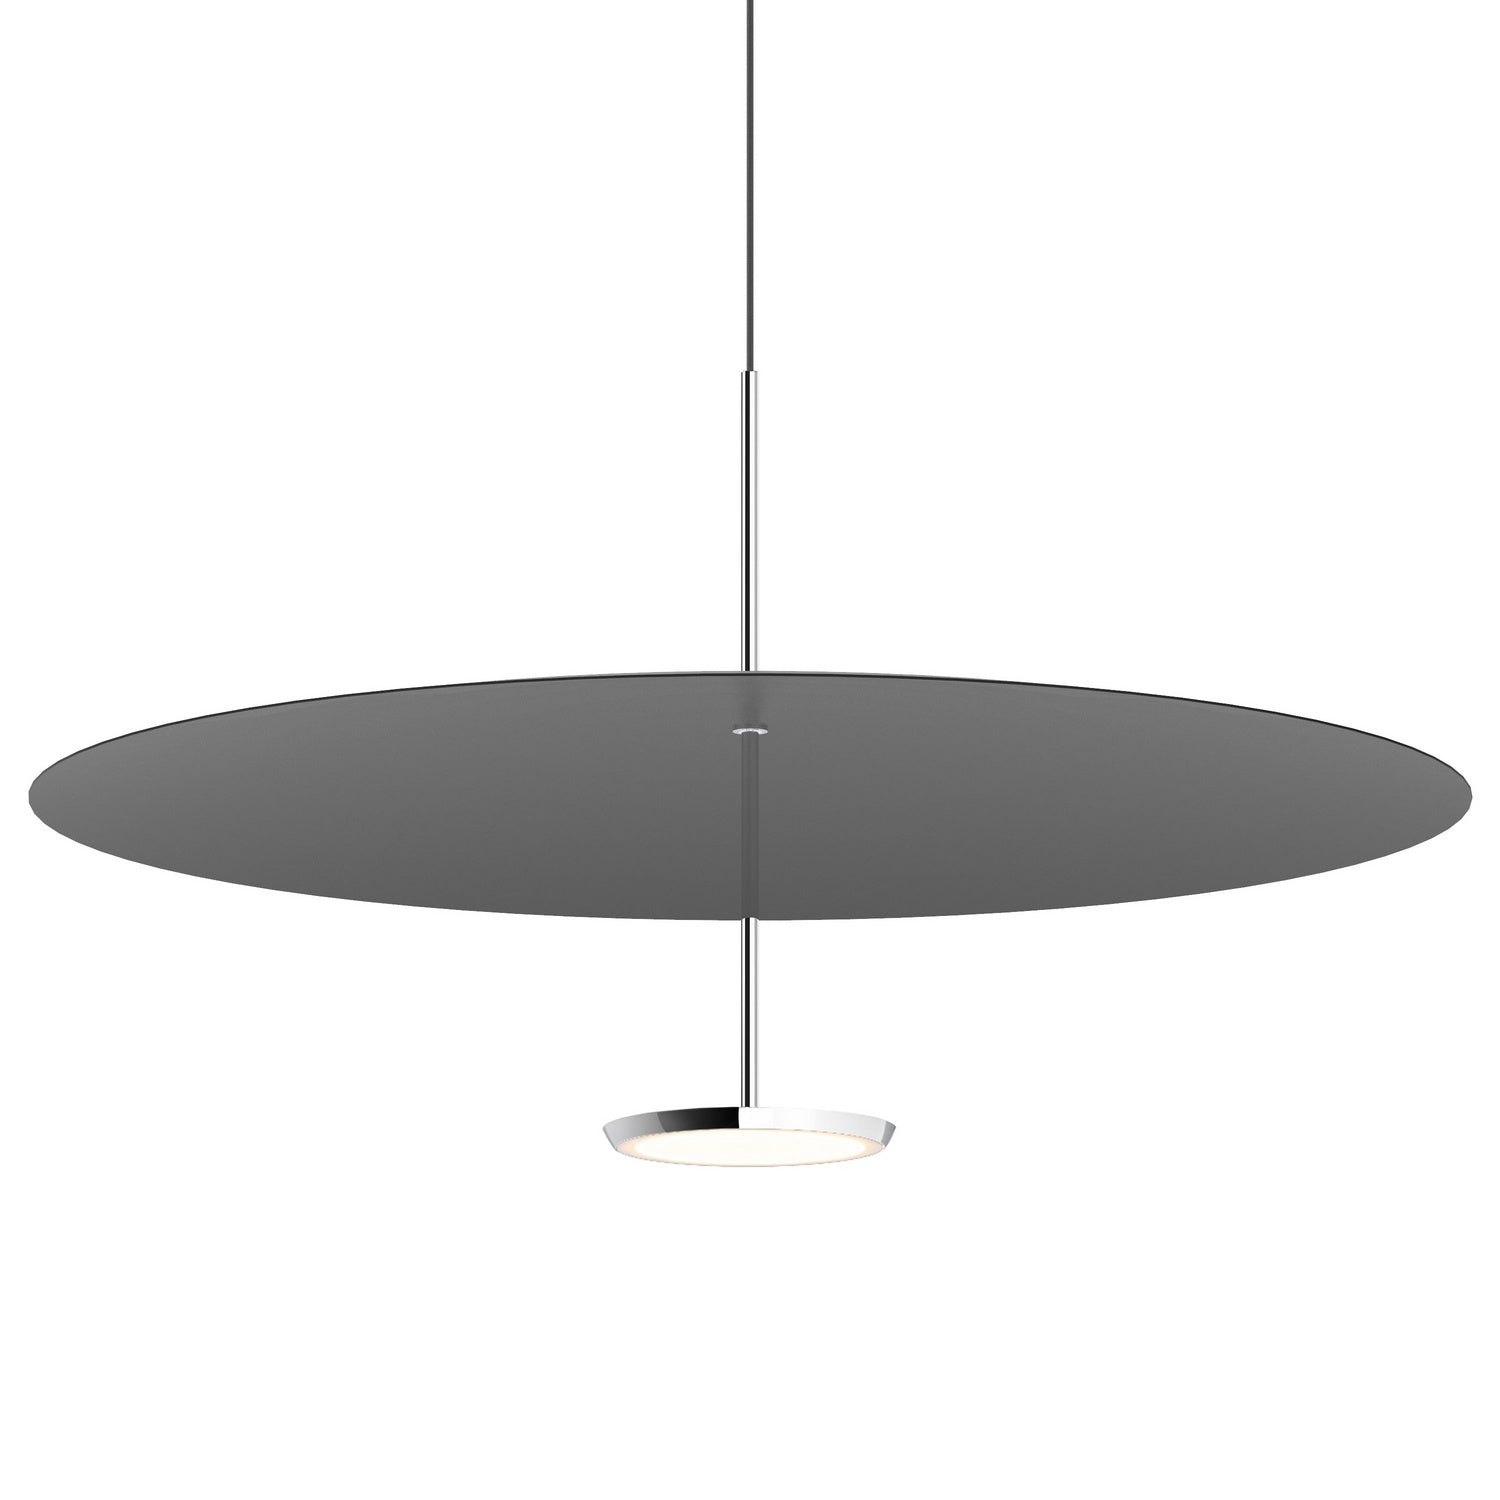 Pablo Designs - LED Pendant - Sky - Black/Chrome- Union Lighting Luminaires Decor